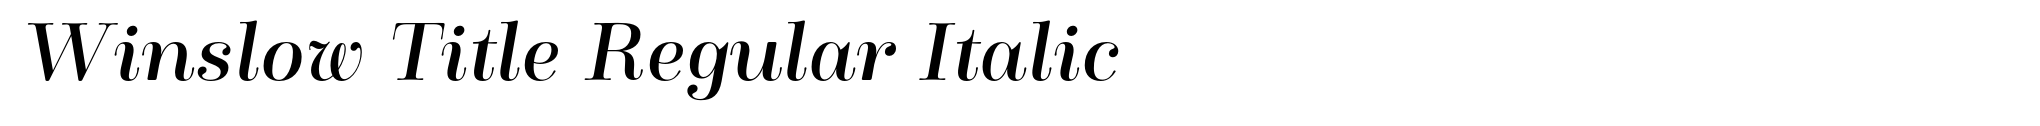 Winslow Title Regular Italic image